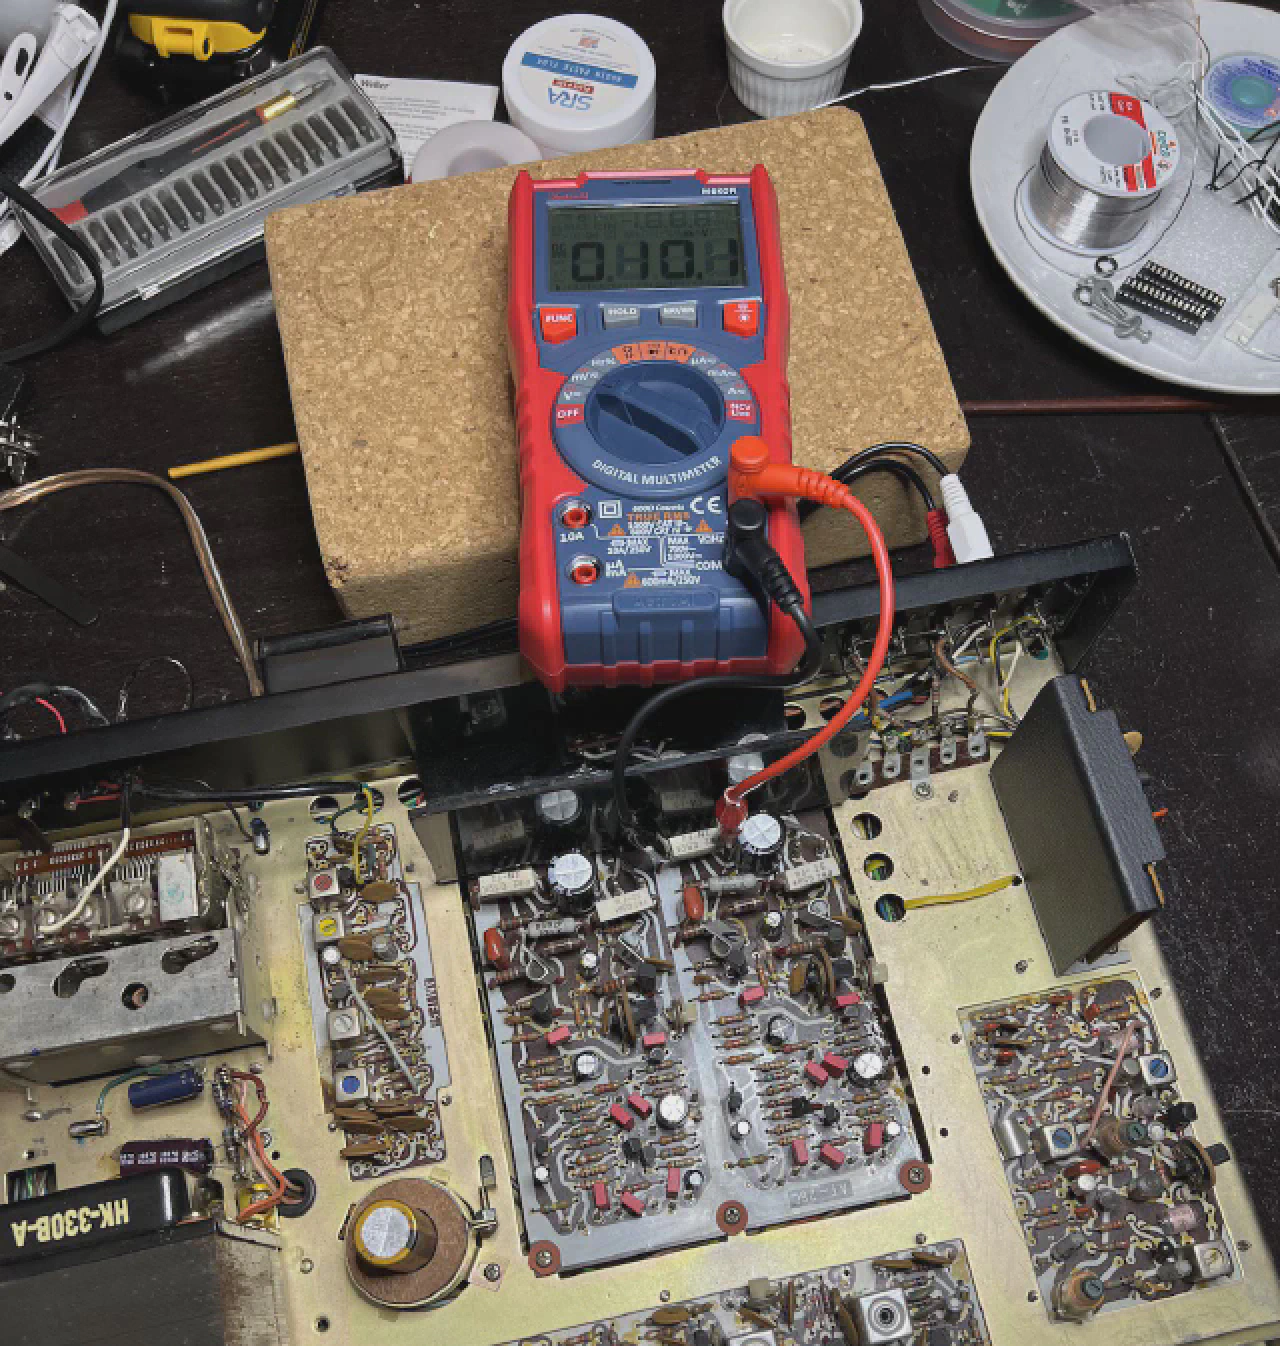 Biasing the amplifier using a multimeter